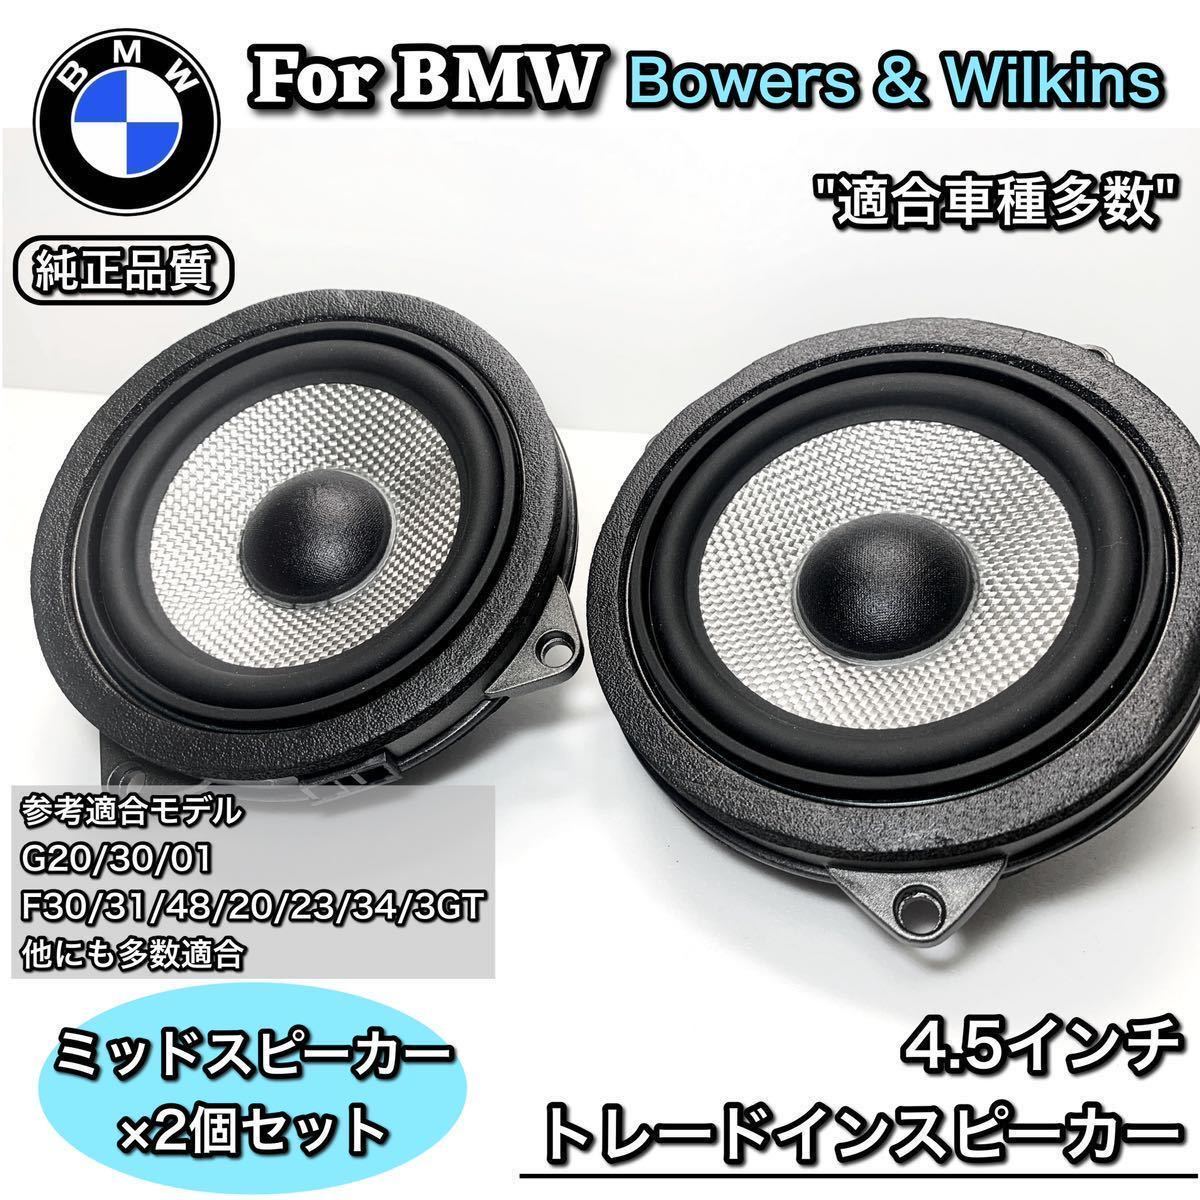 BMW スピーカー 純正交換 トレードイン ミッド Bowers  Wilkins BW カーオーディオ 4.5インチ 4オーム F30/F31/32/34/36  G20/21